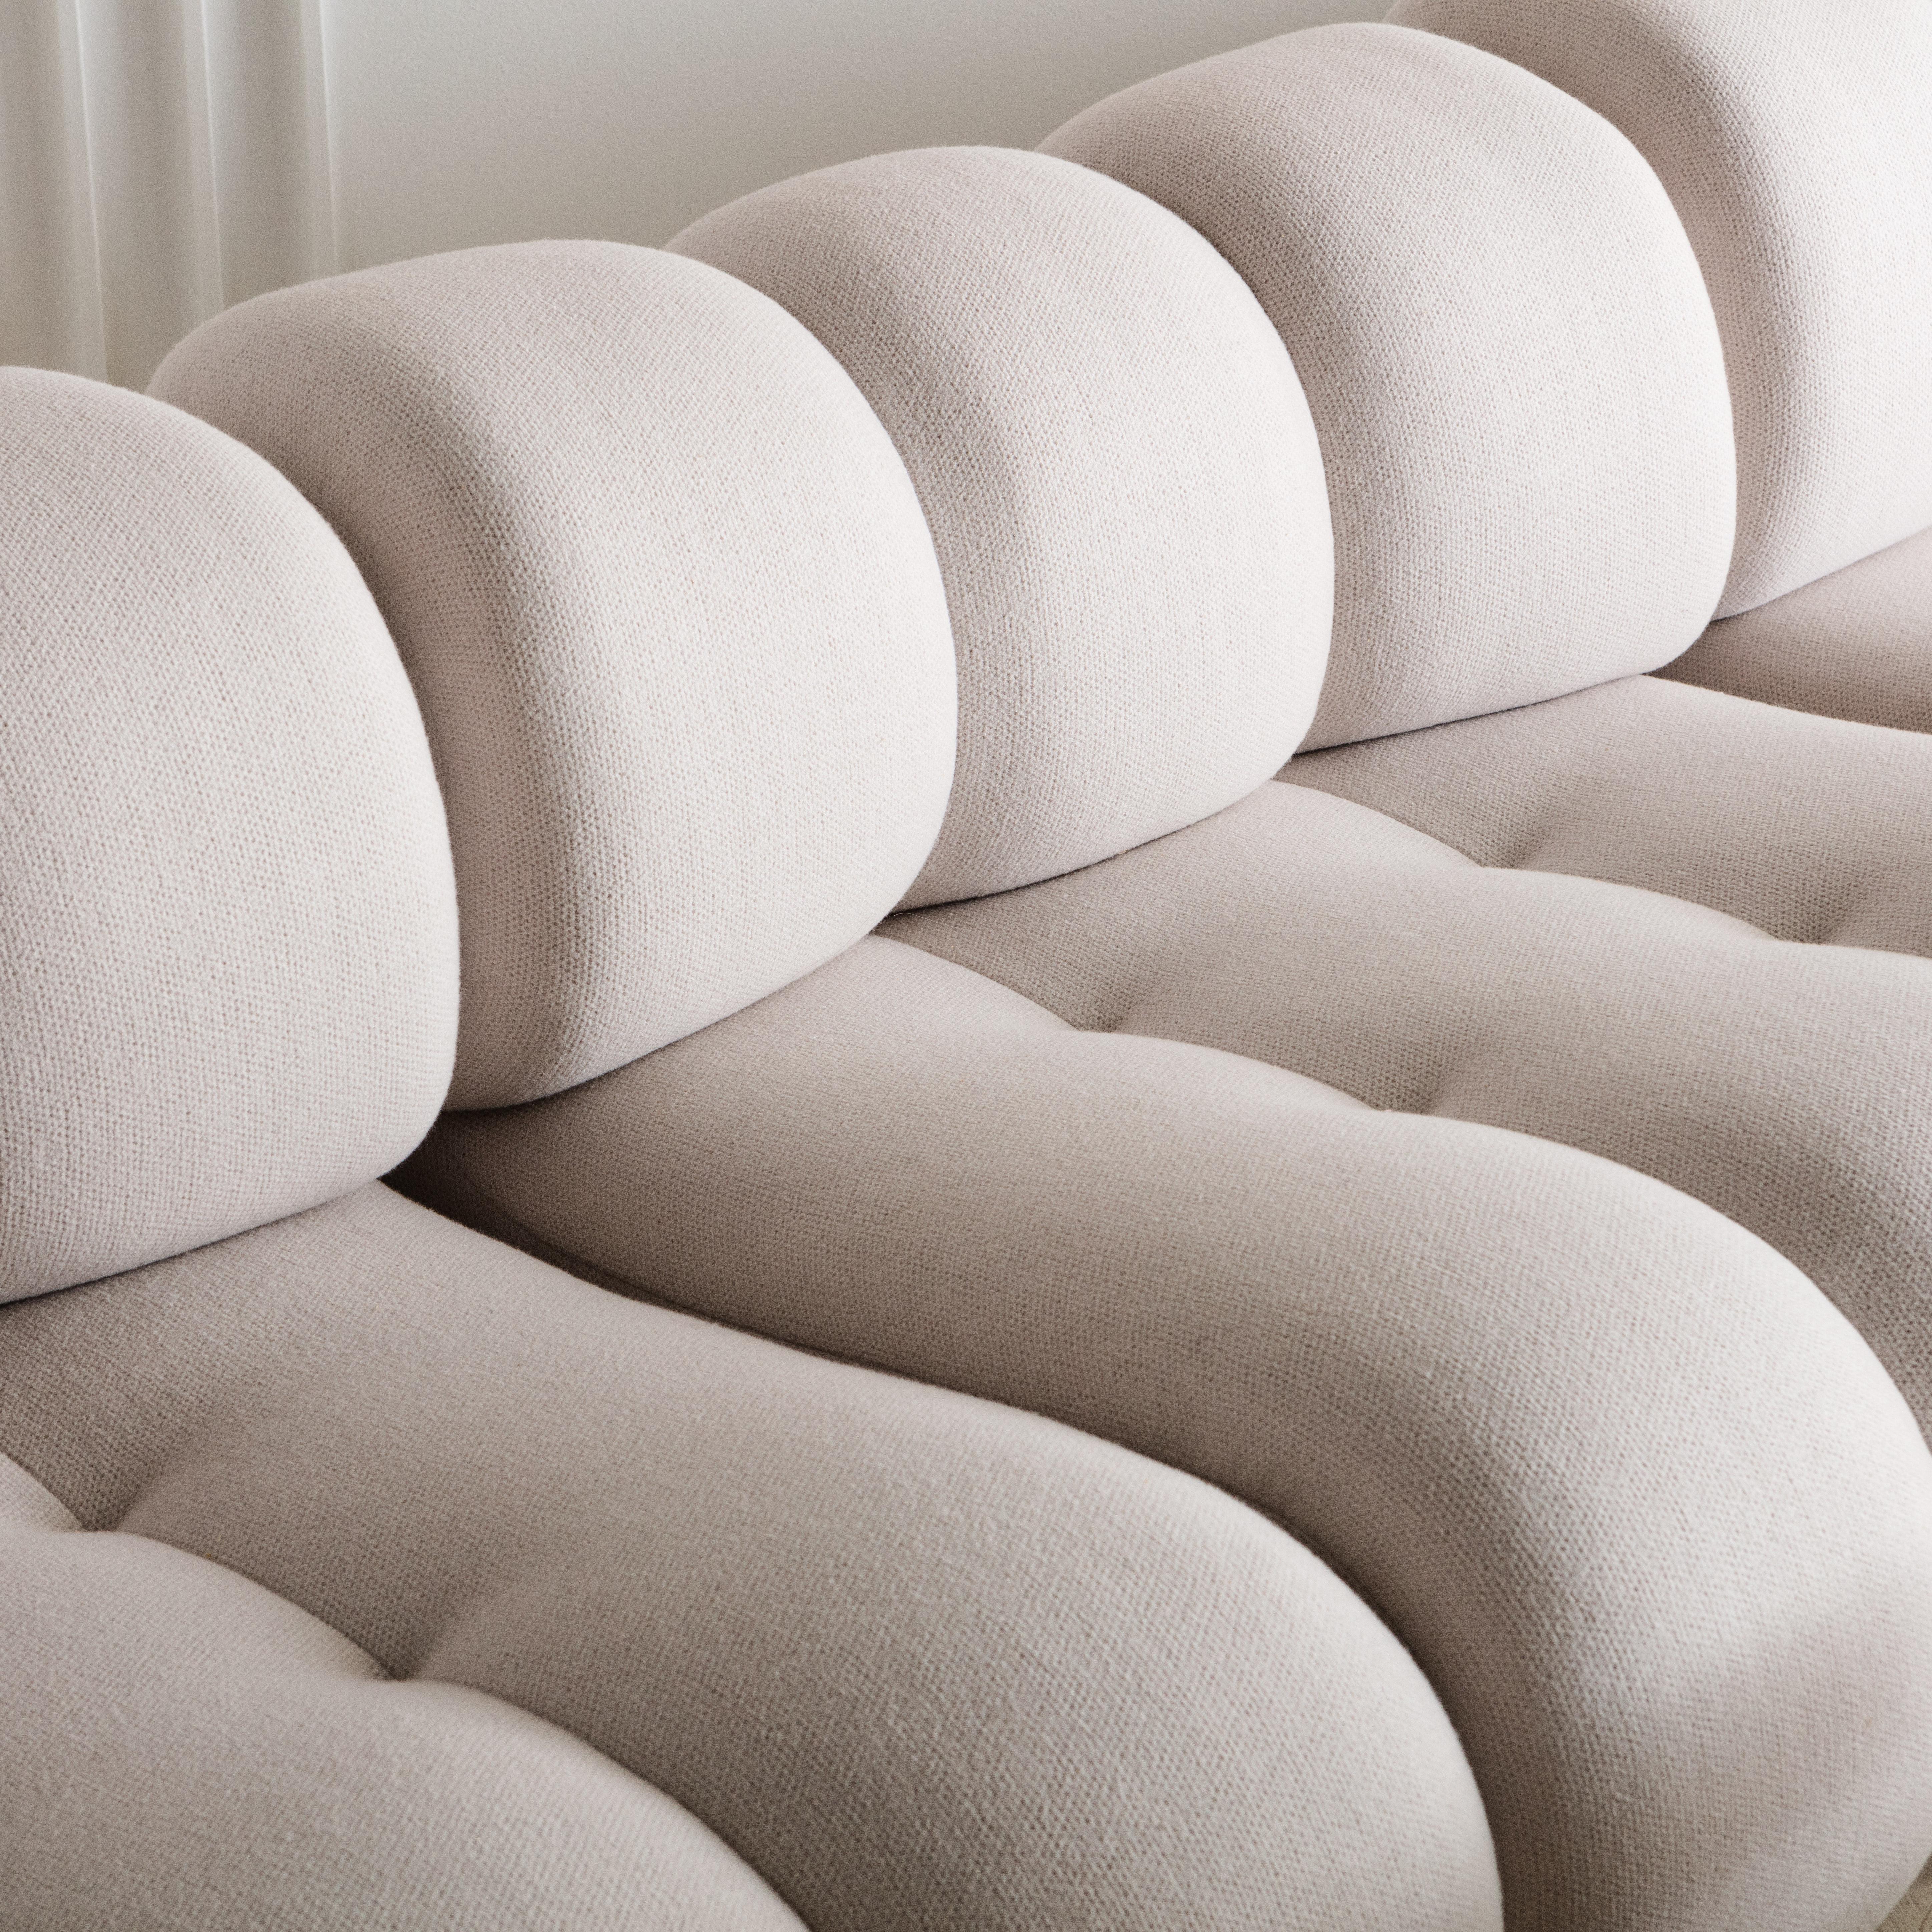 Mid-Century Modern Channeled Sofa by Giuseppe Munari for Munari in new Cashmere Wool